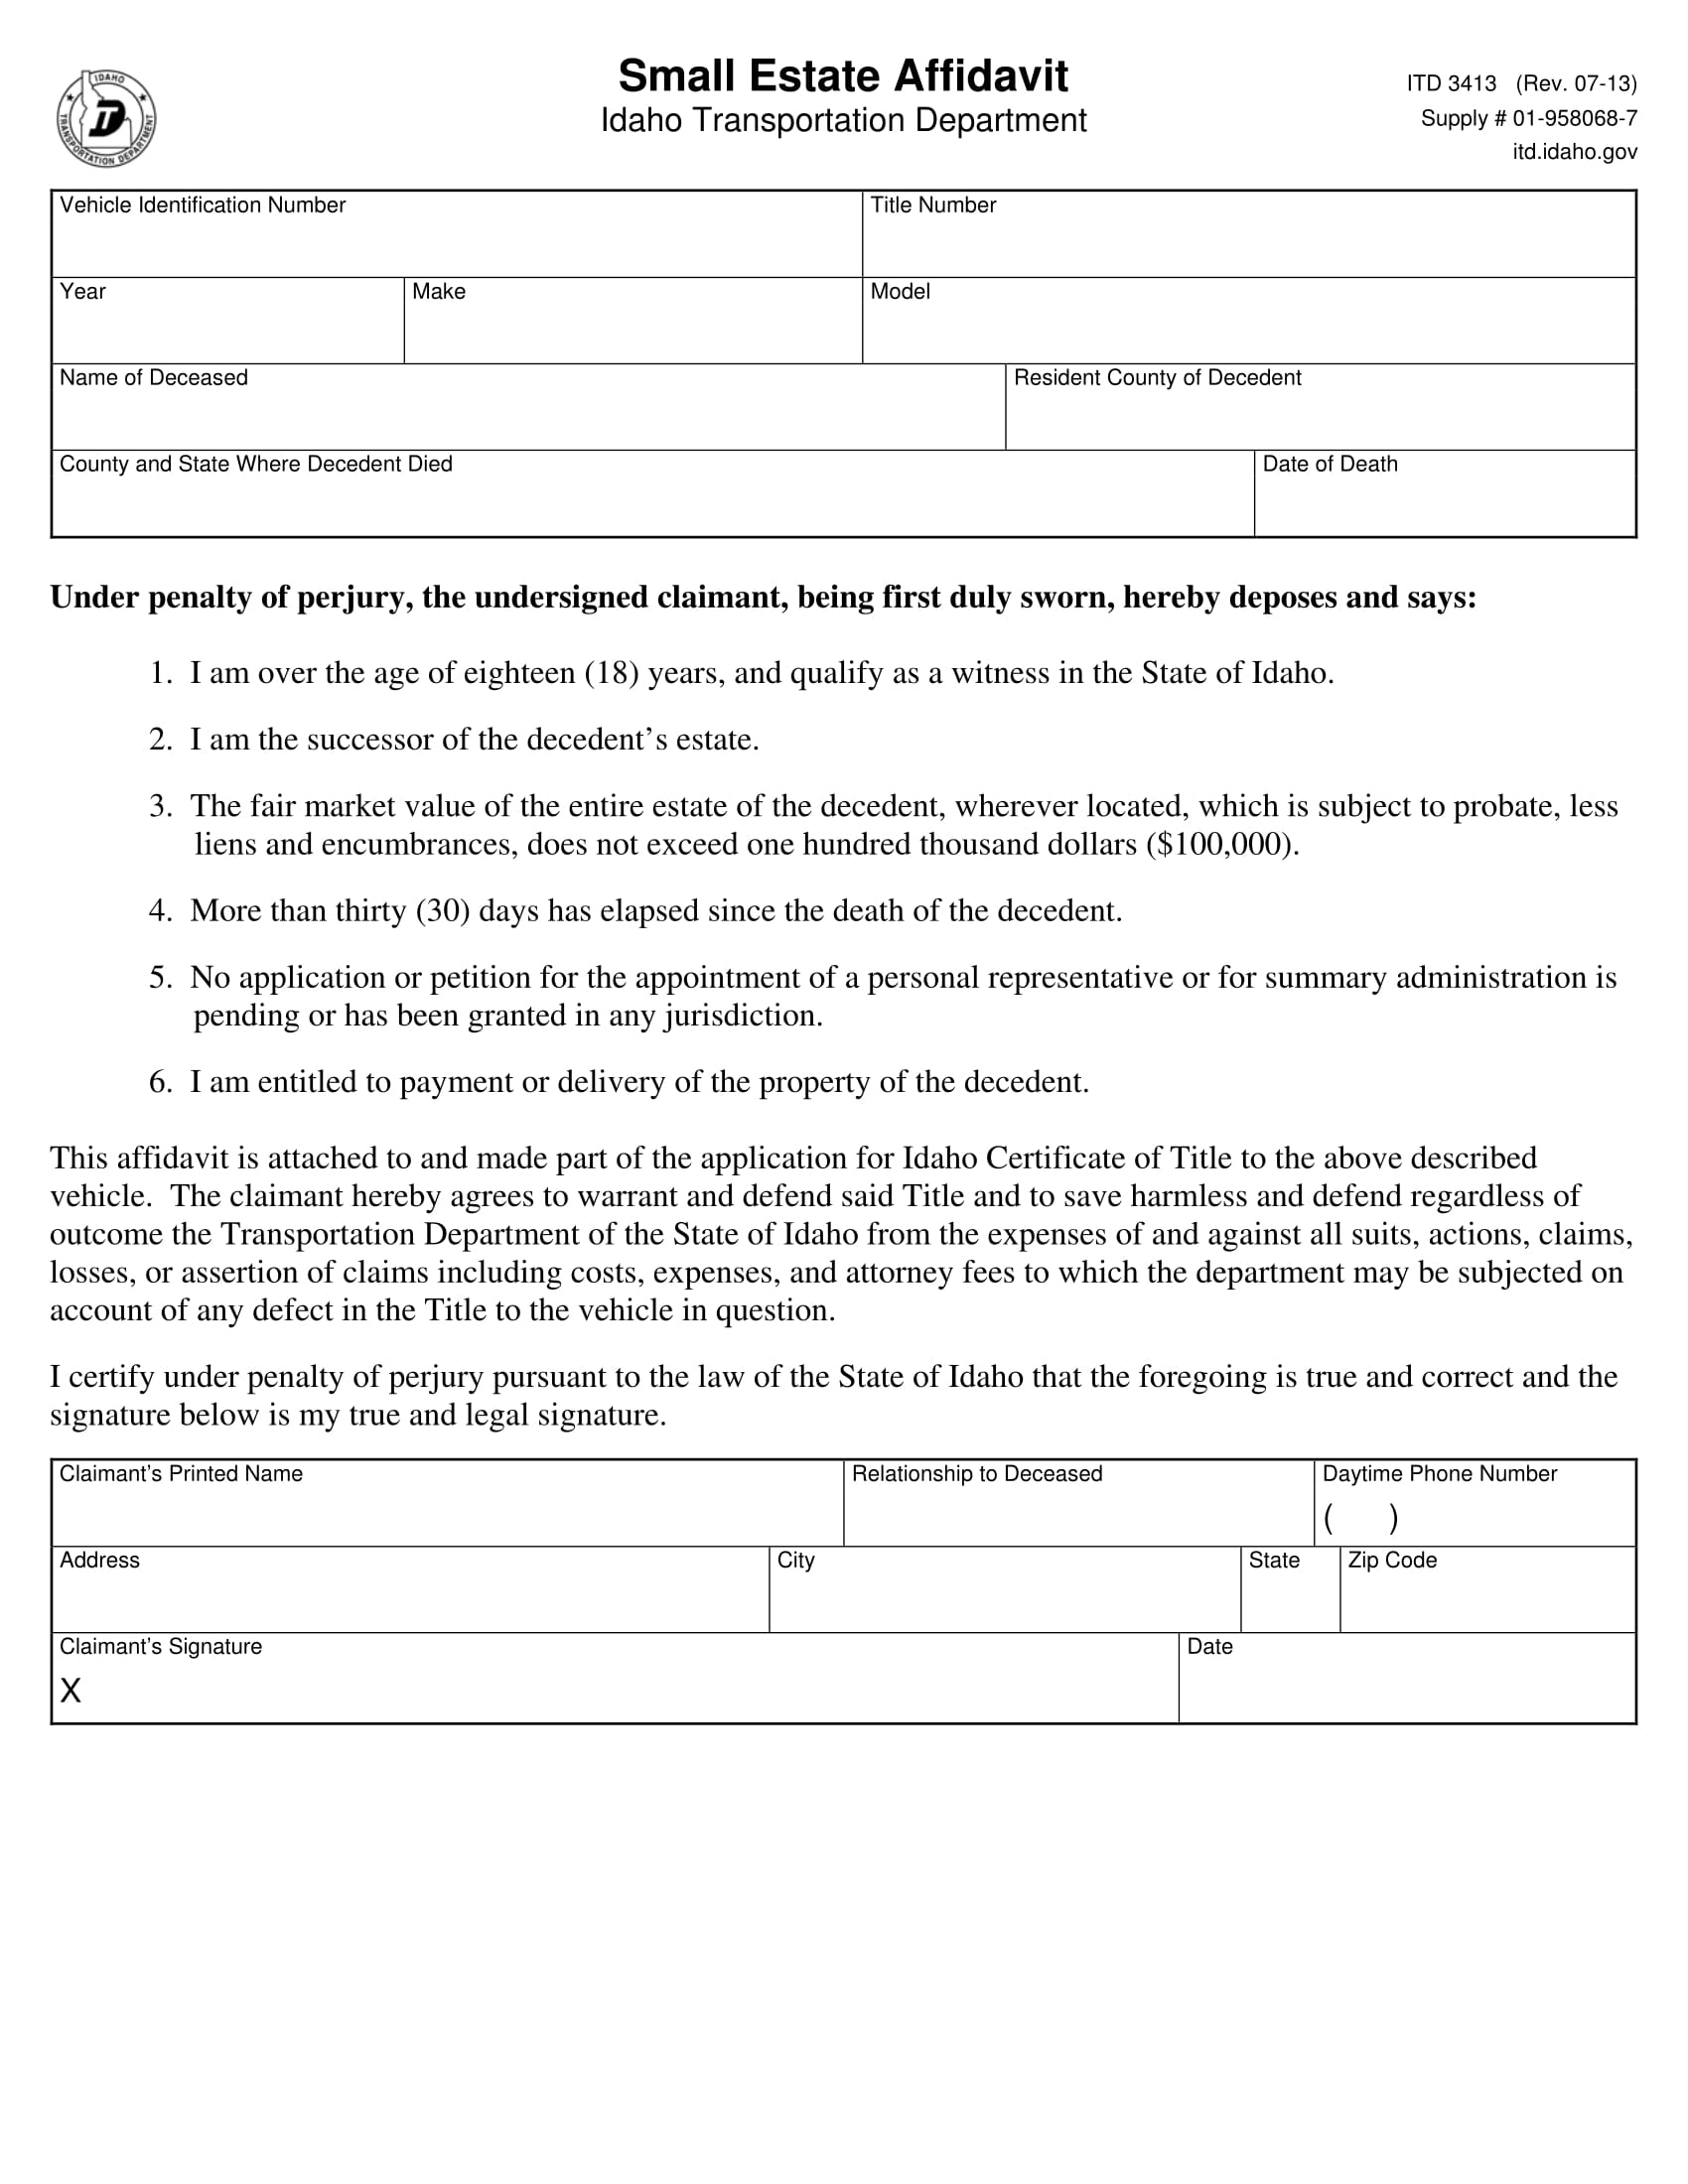 transporation small estate affidavit form 1